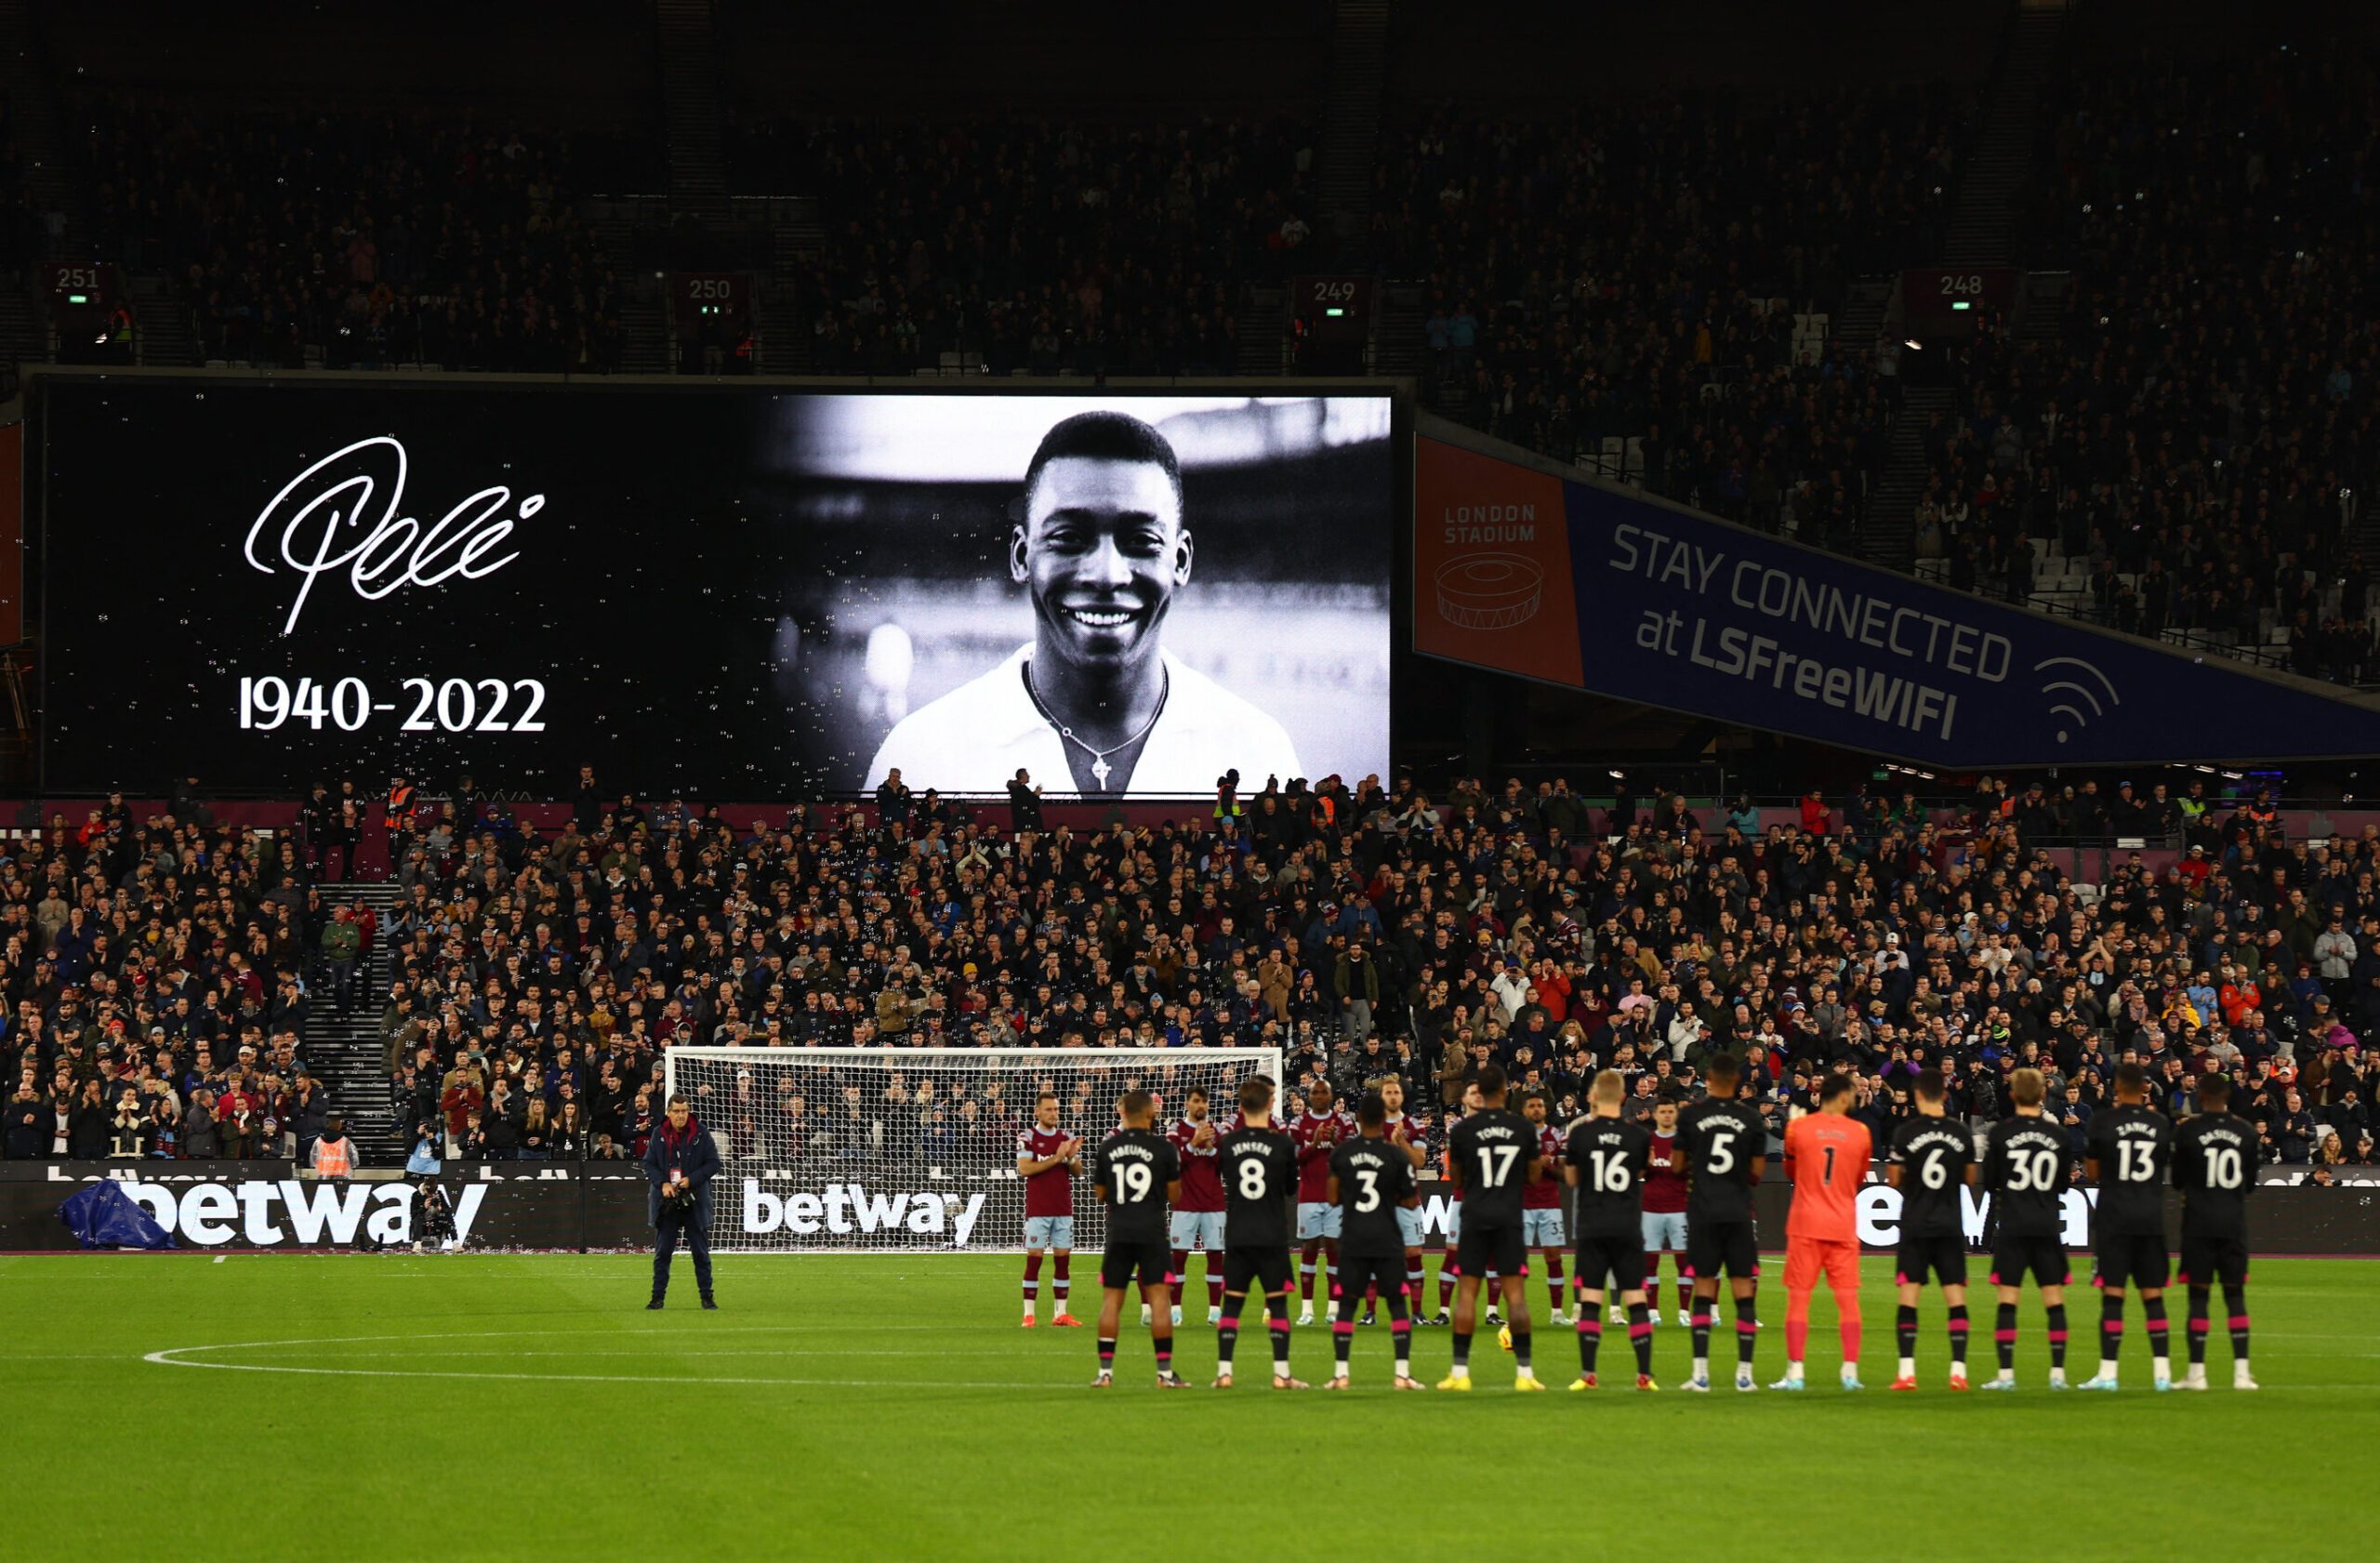 World soccer to fall silent in memory of Brazilian legend Pele